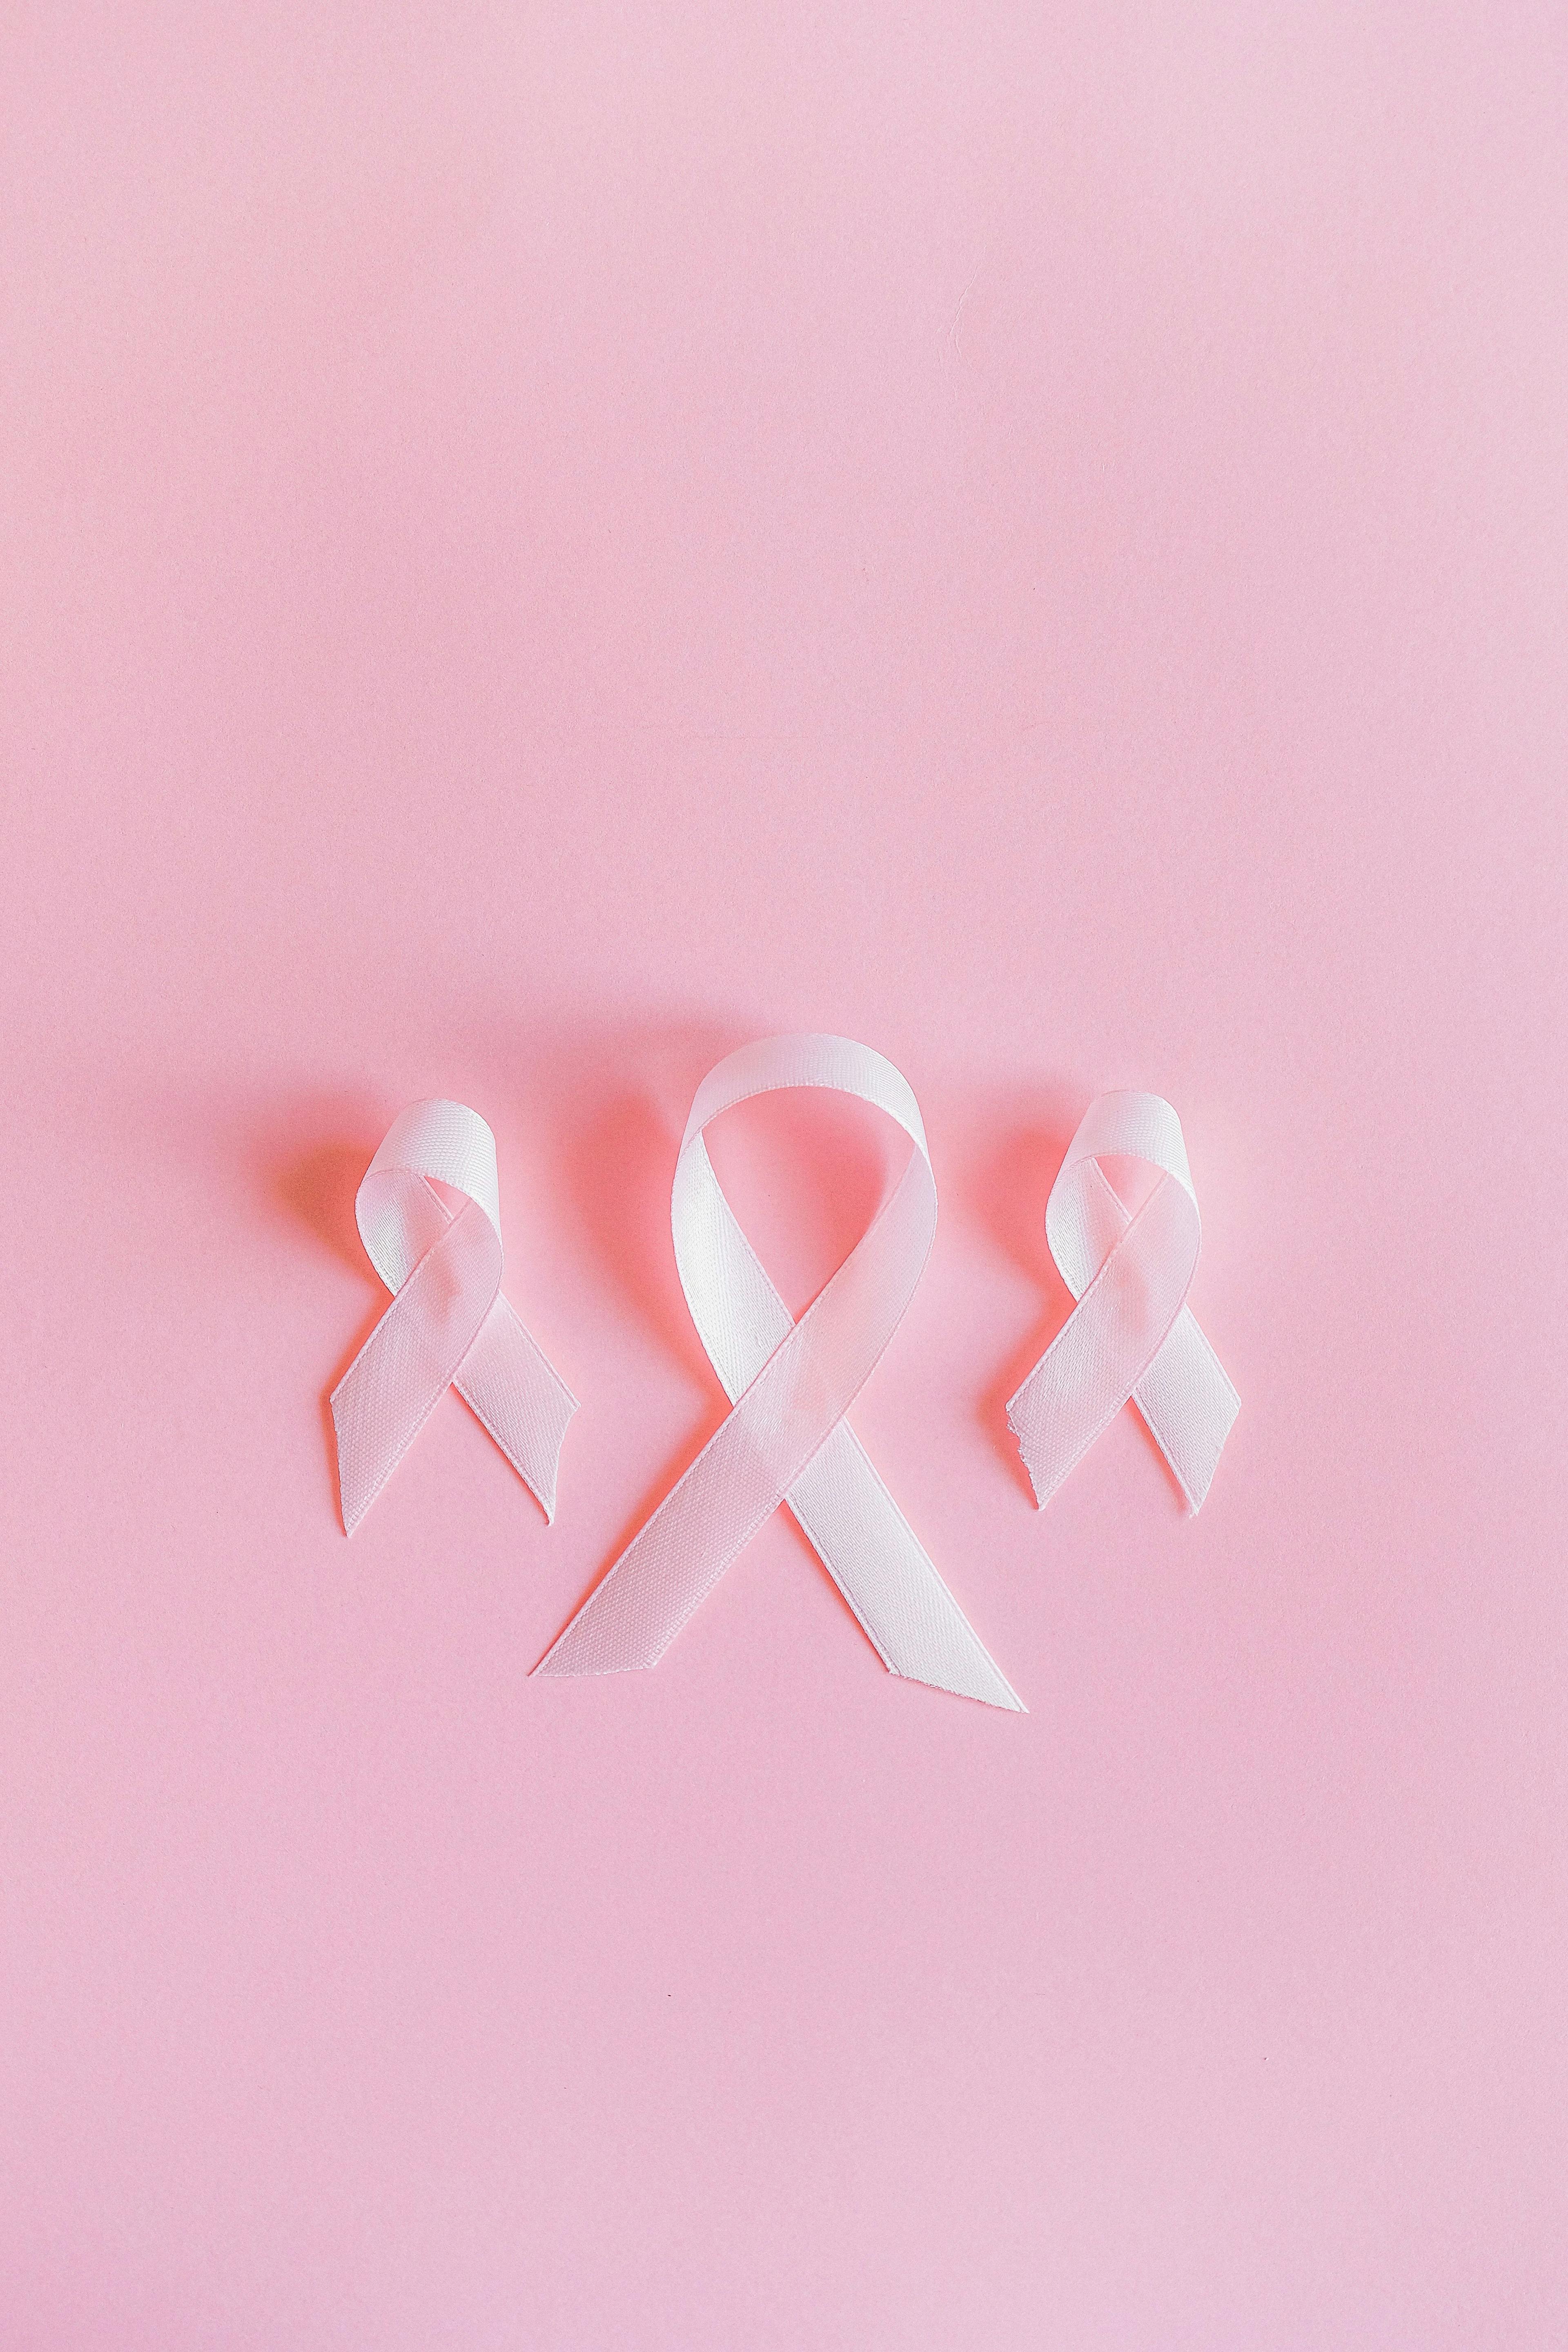 Vulvovaginal atrophy among breast cancer survivors